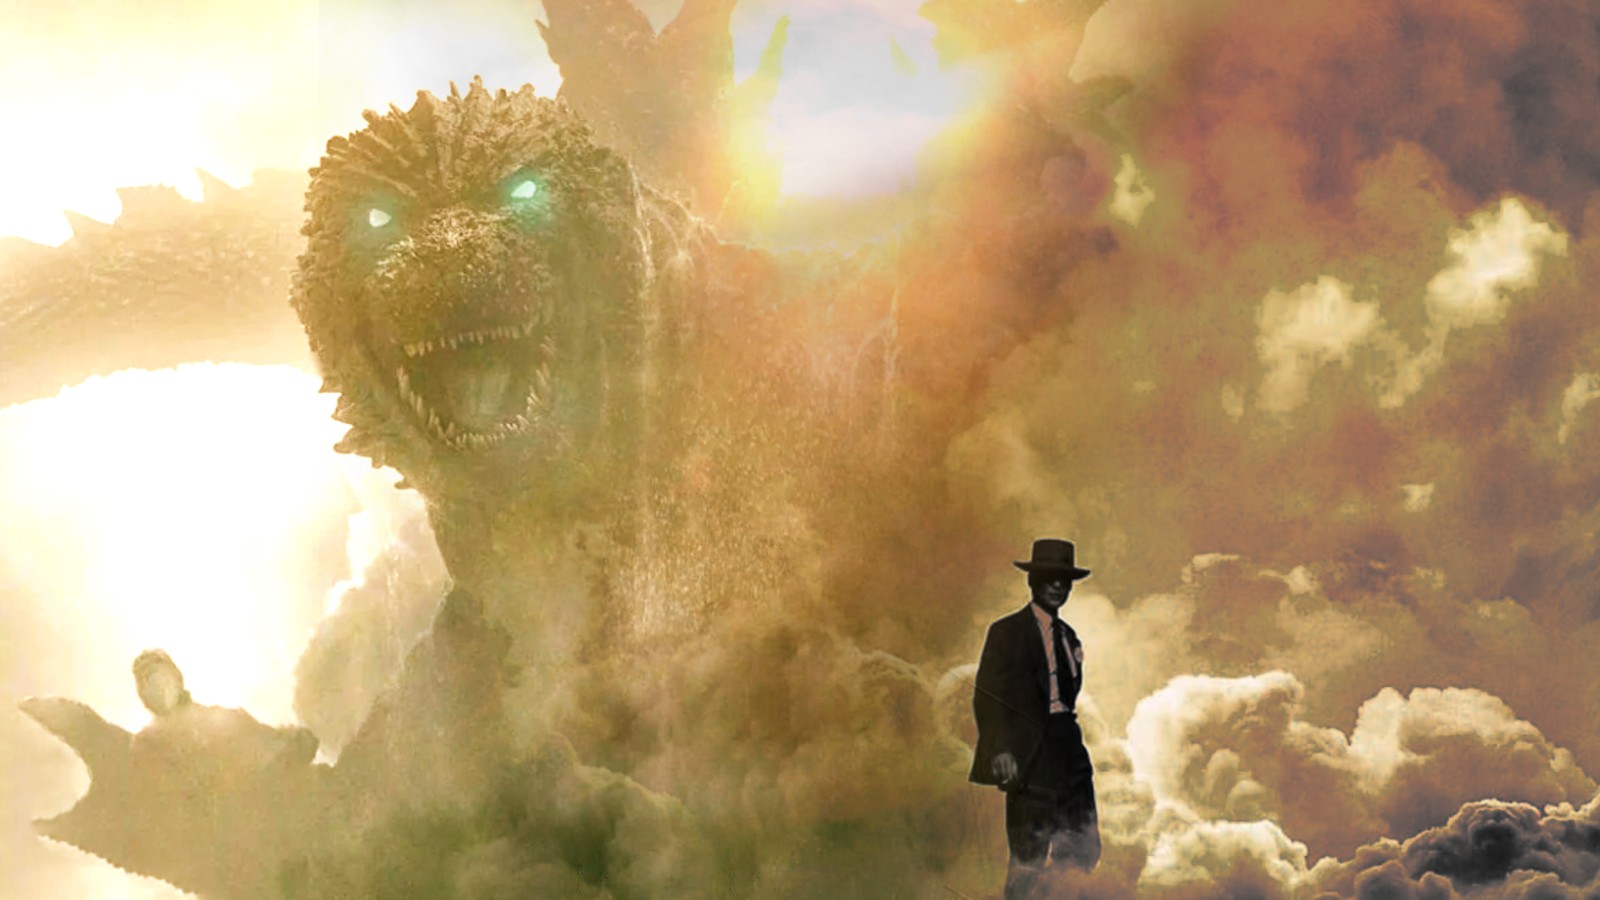 Godzilla: Minus One Increases Theater Screens: Passes Oppenheimer on IMDb